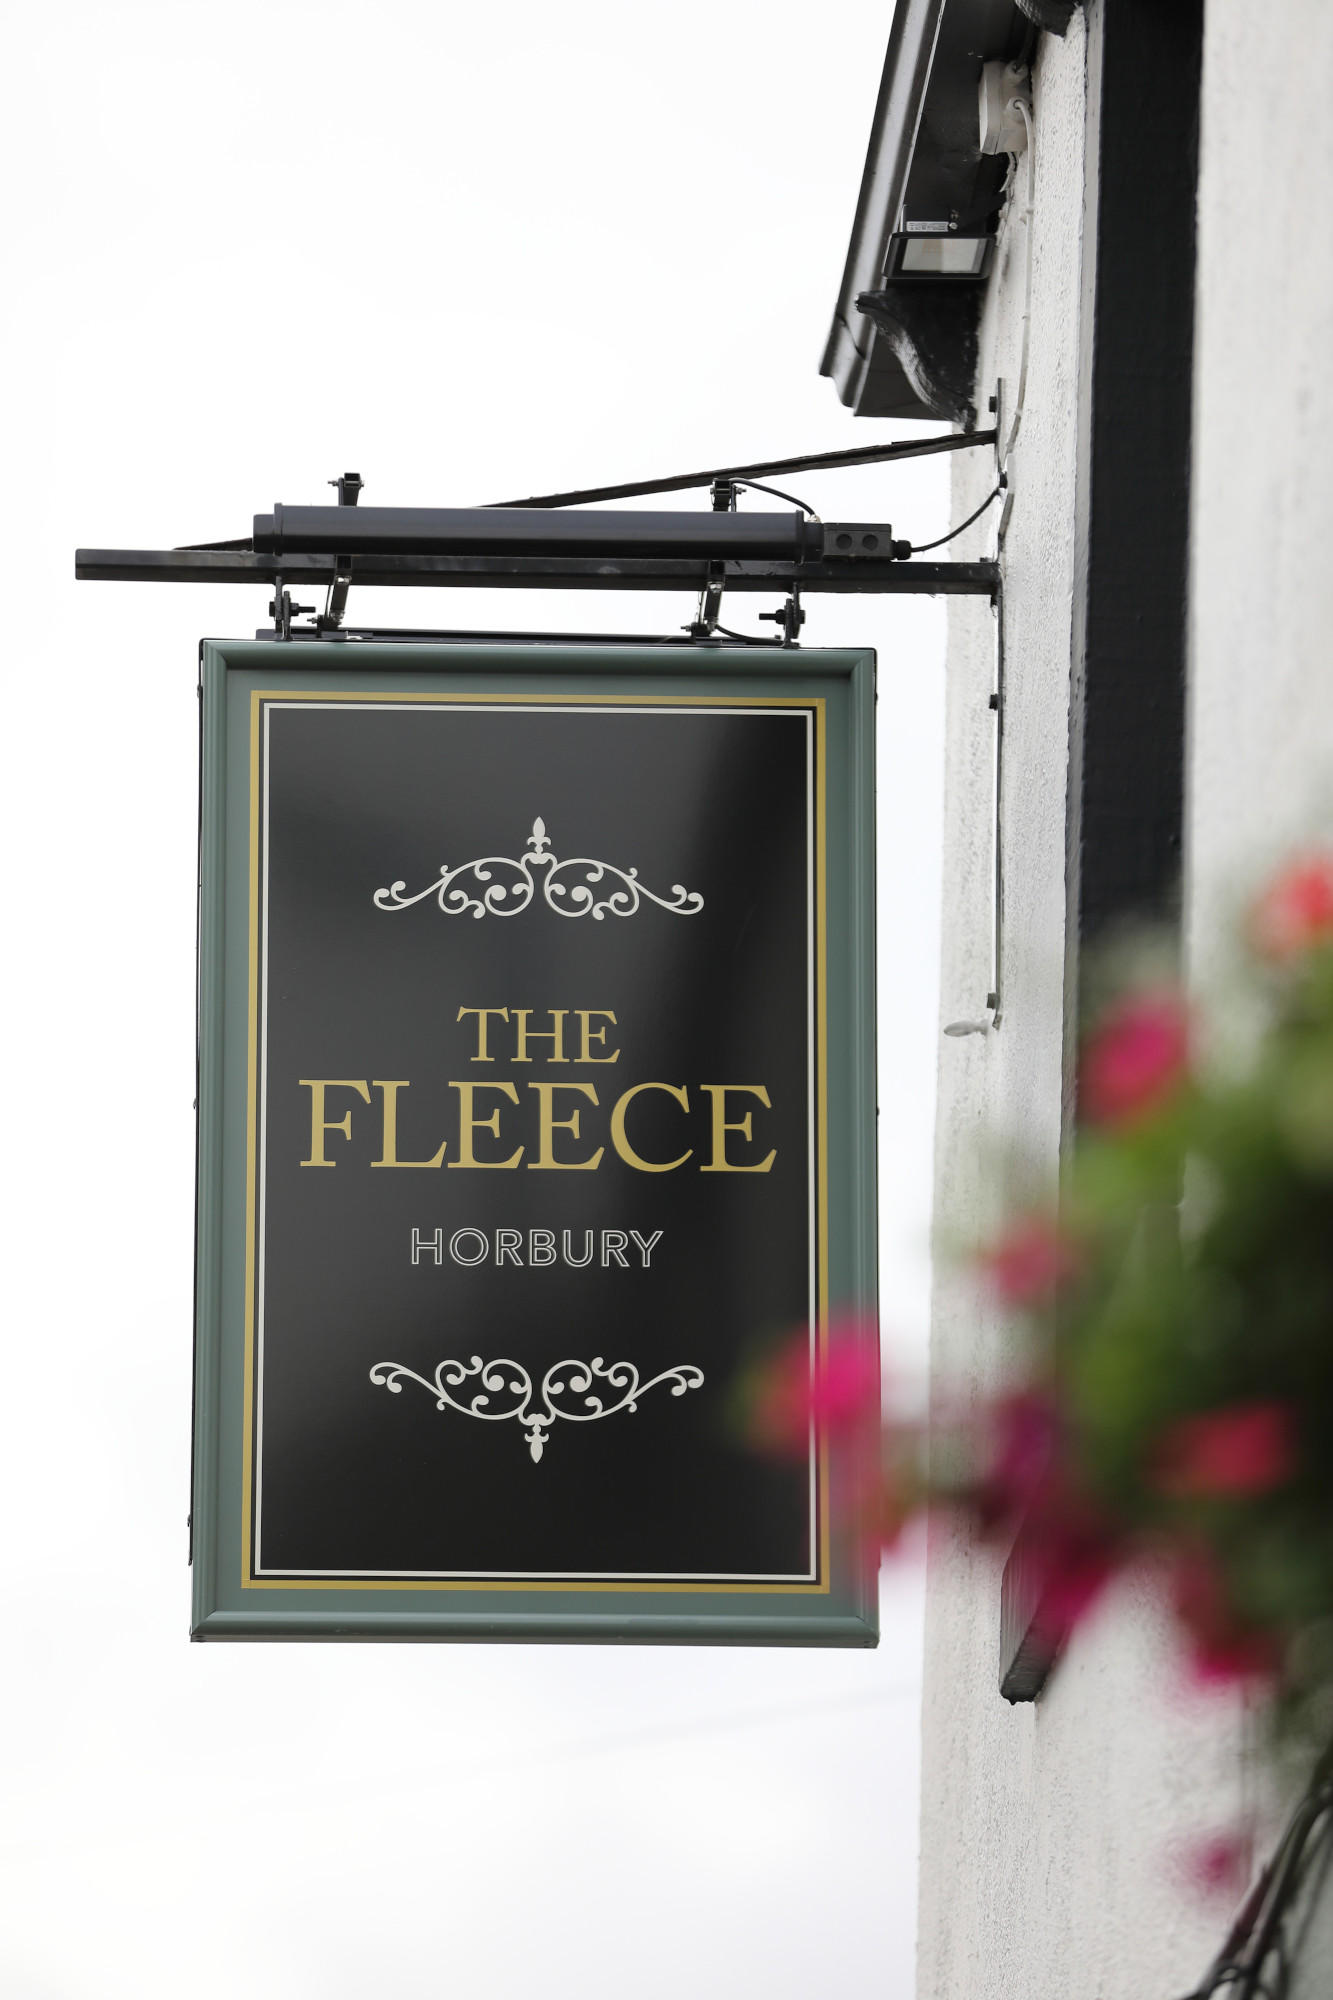 Images The Fleece